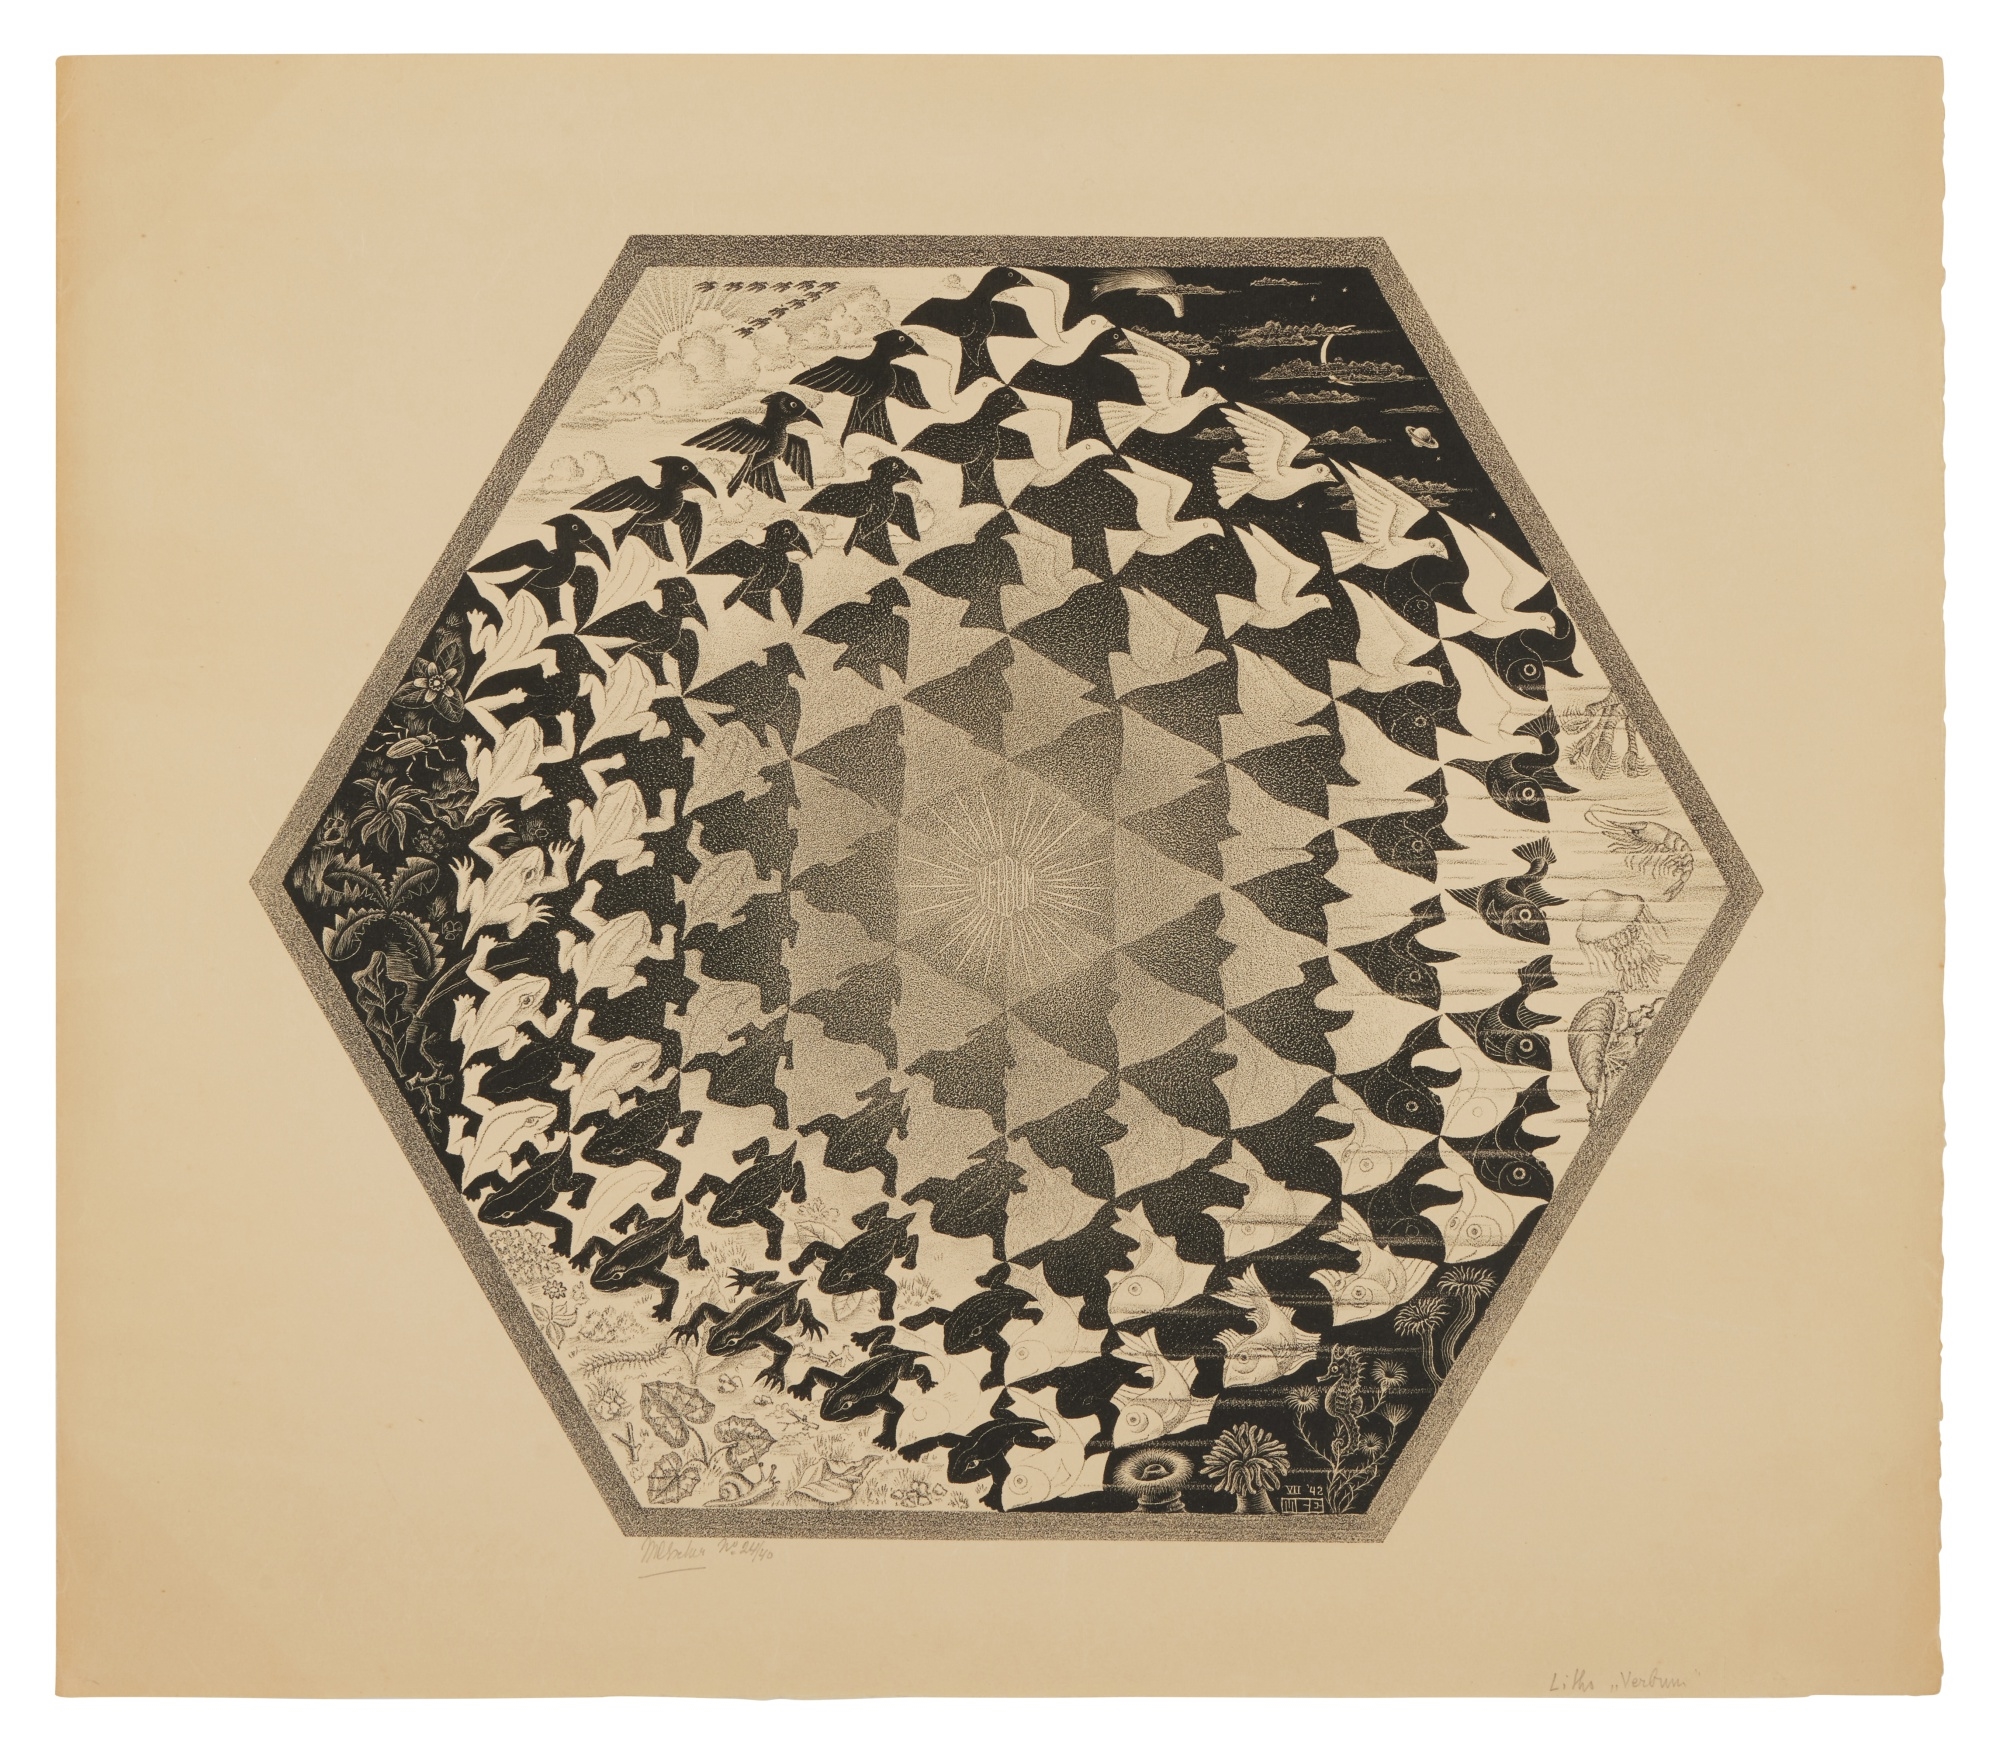 Verbum by Maurits Cornelis Escher, Executed in 1942